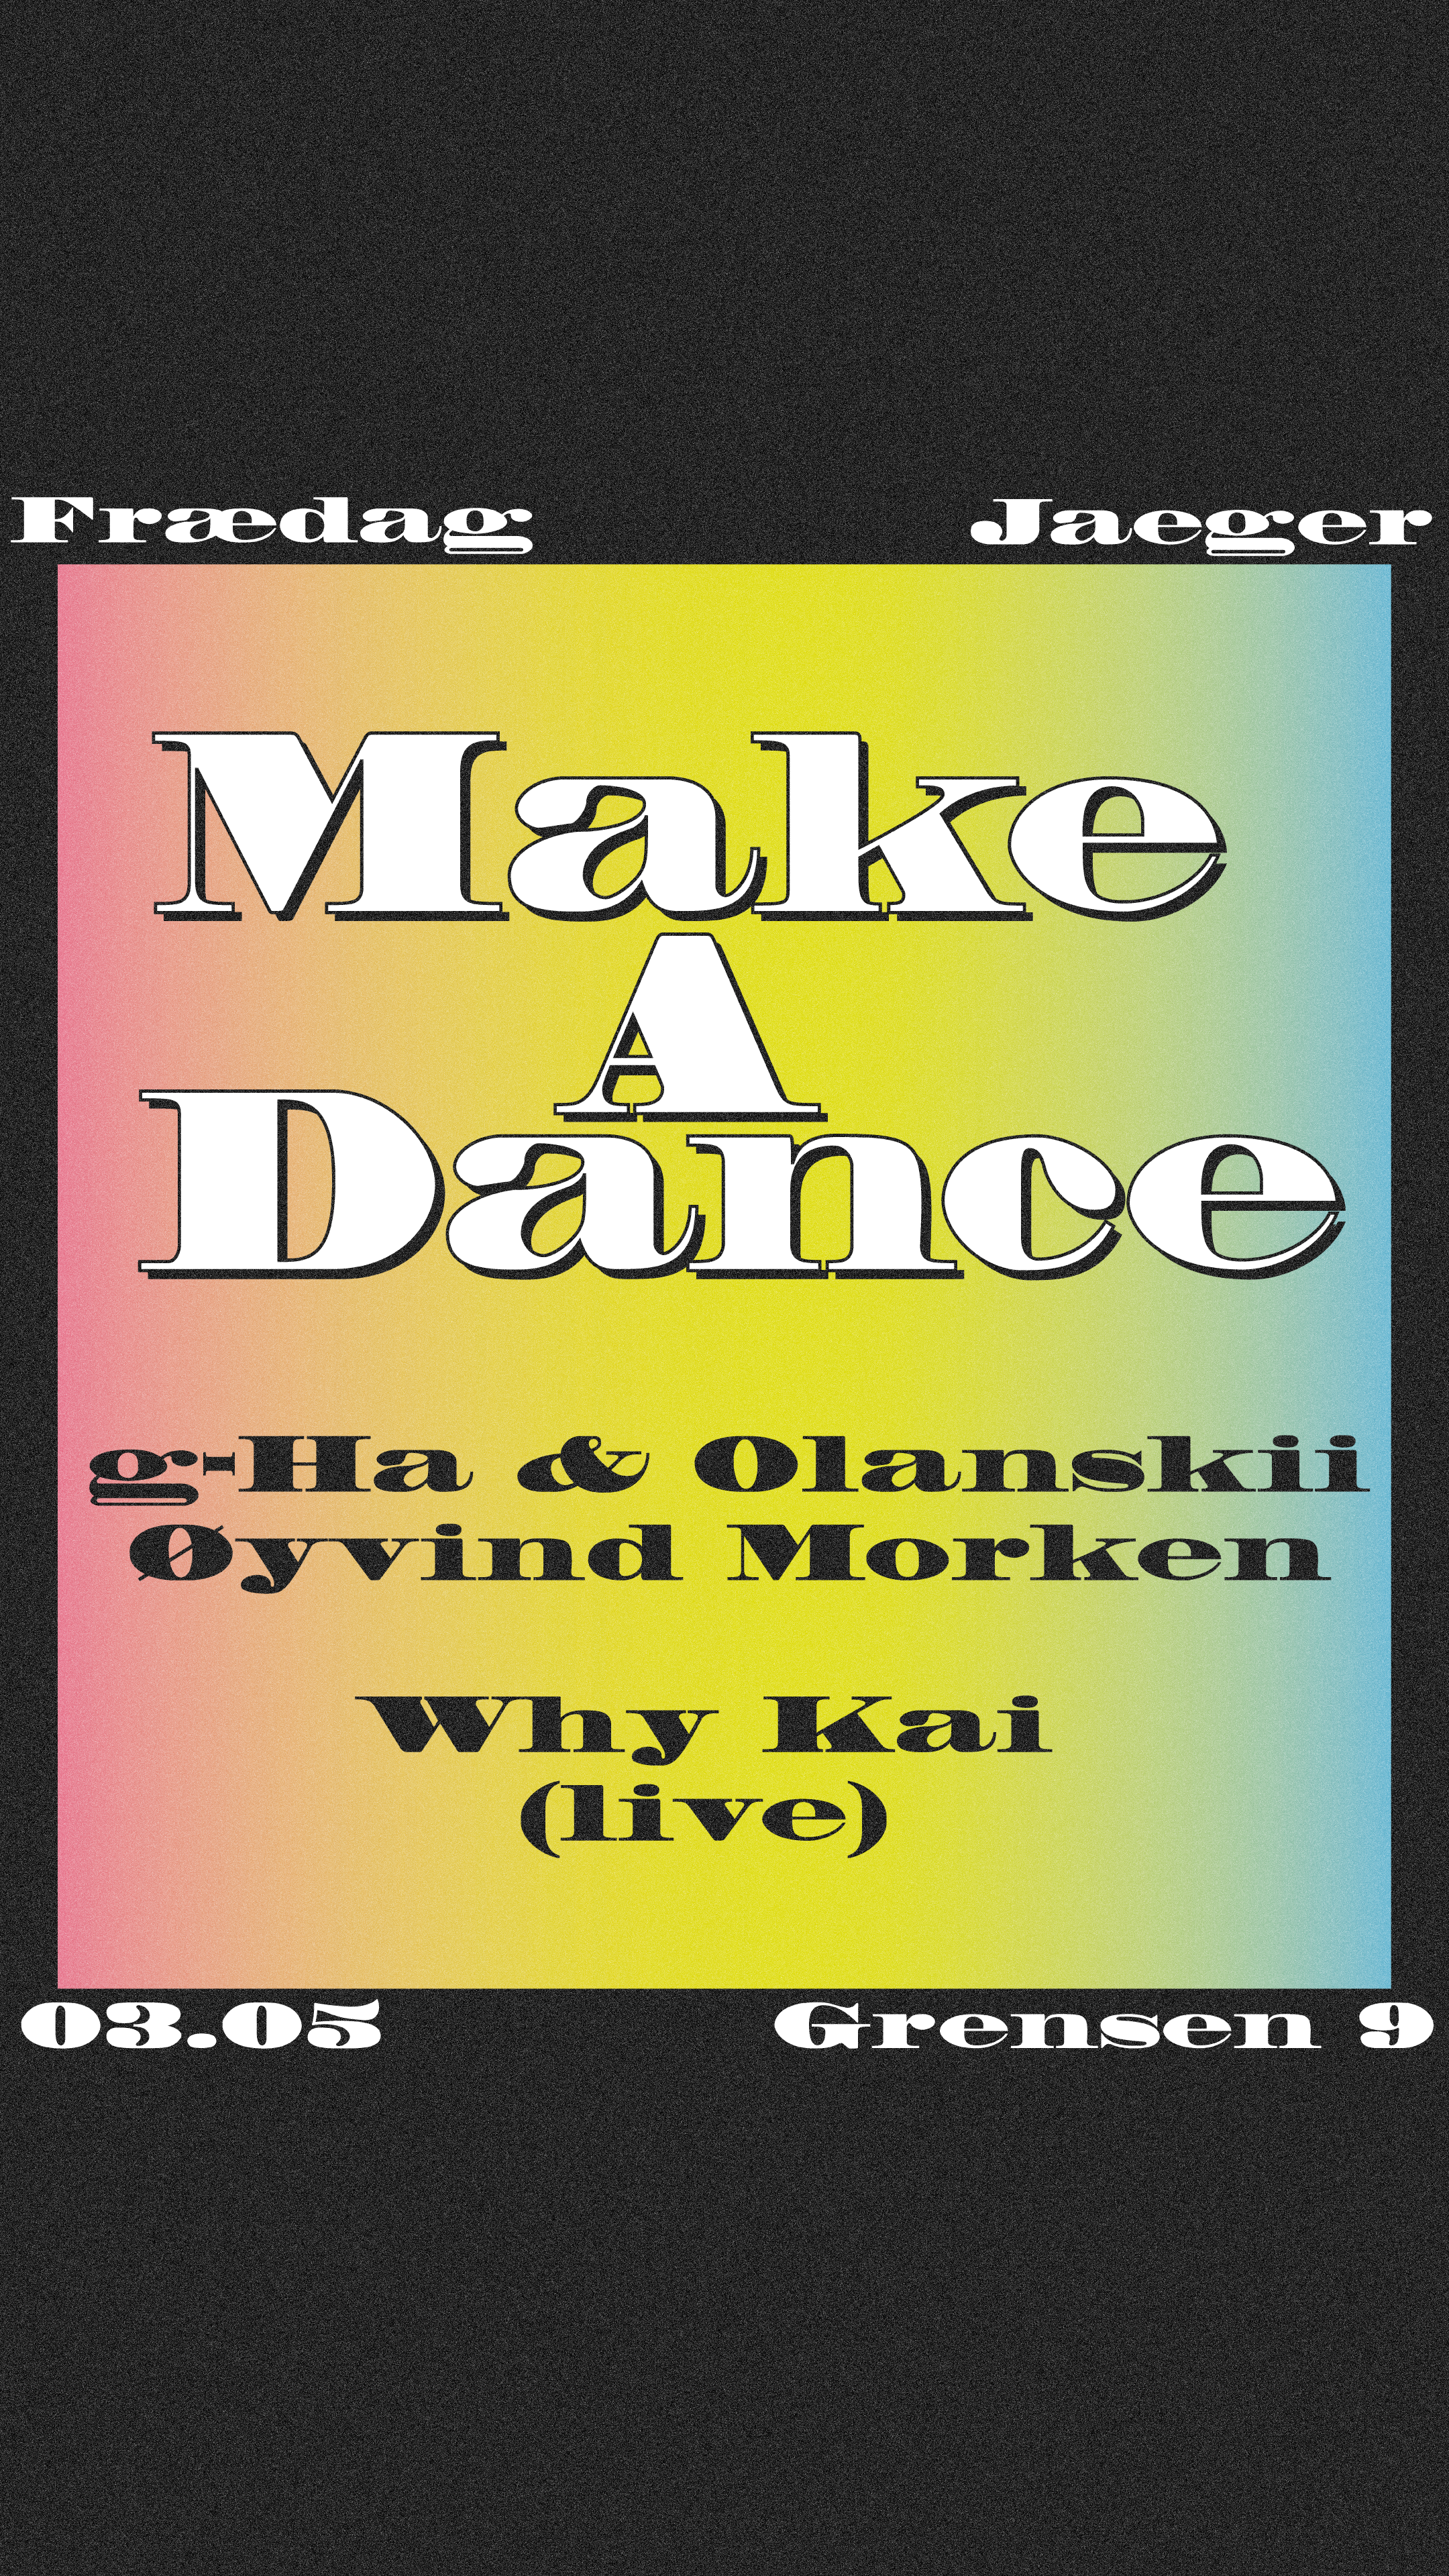 Frædag: Make A Dance + Why Kai (live) - LP Release - フライヤー表